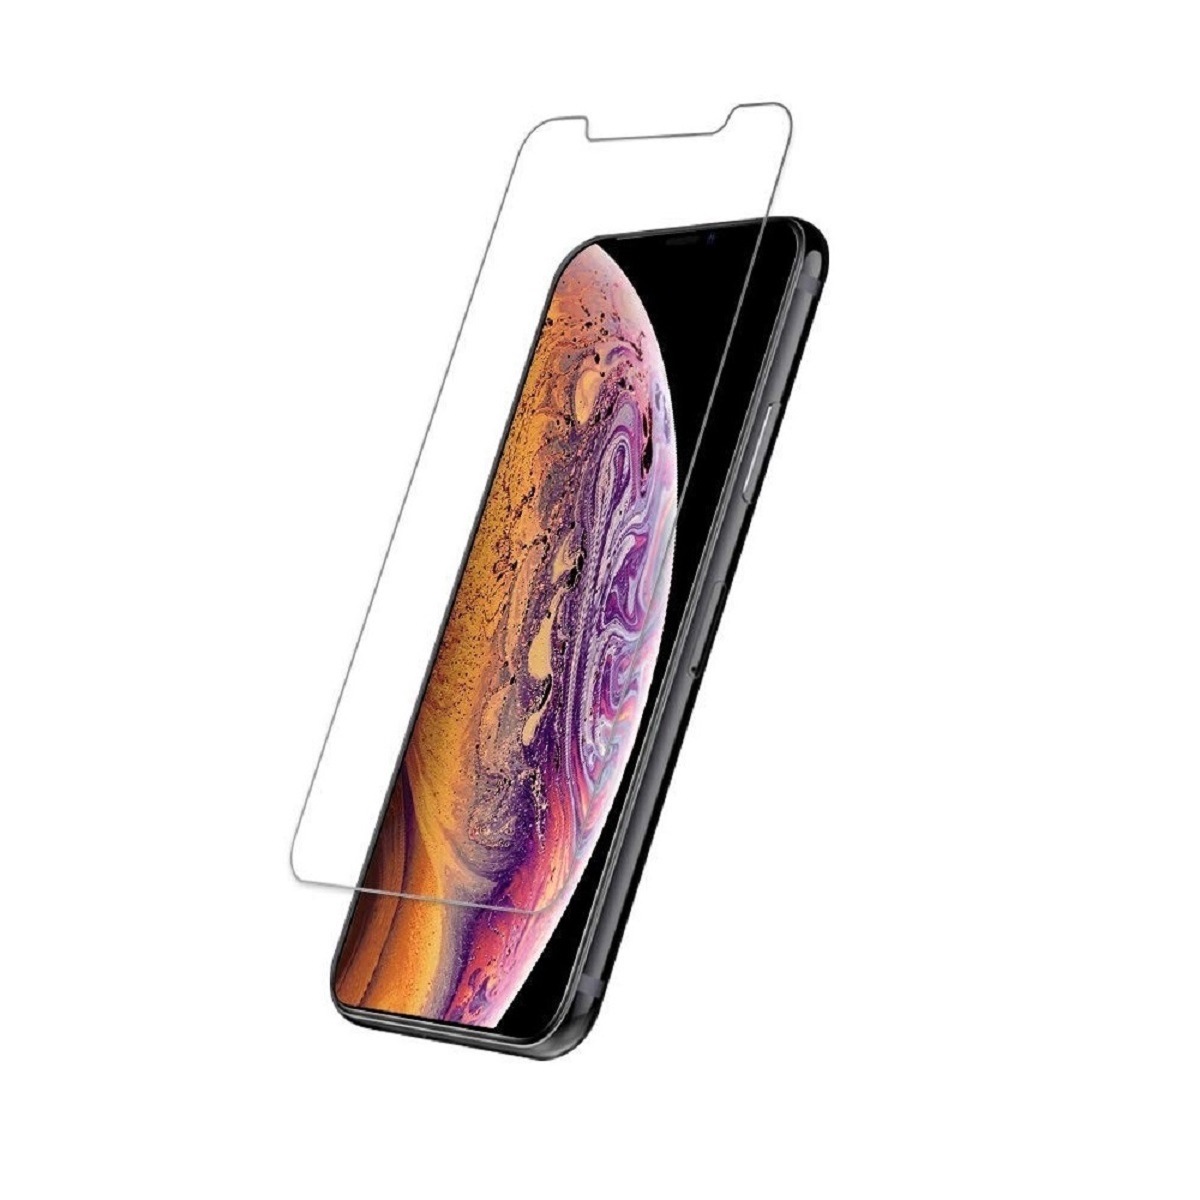 фото Защитное стекло EVA для Apple iPhone XR прозрачное 0,26 мм, прозрачный